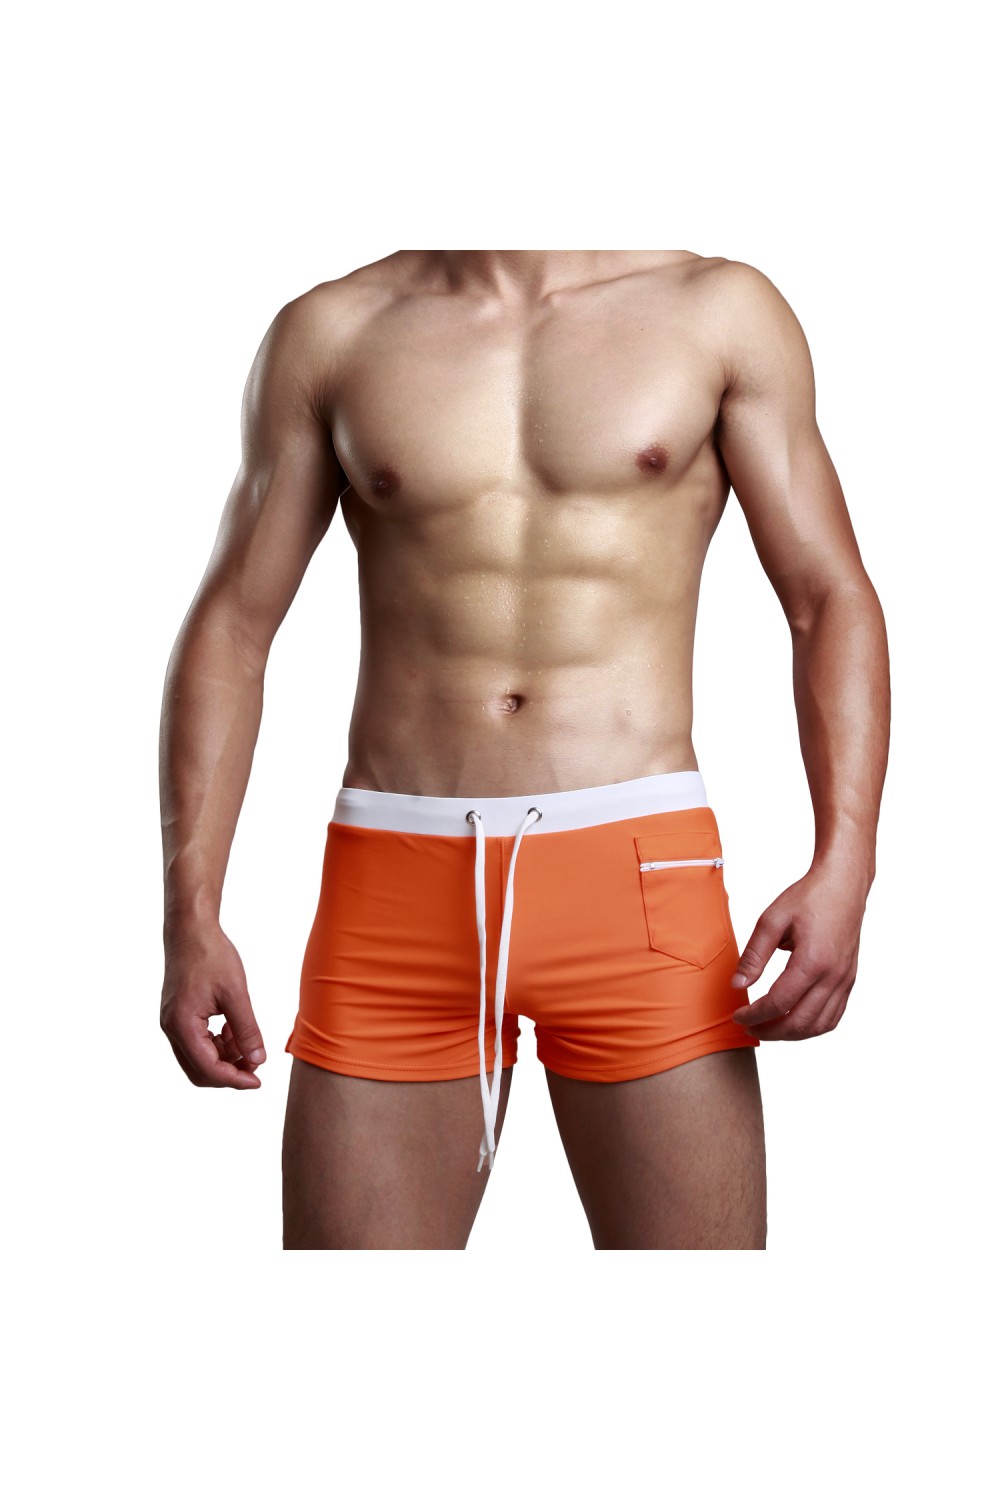 https://g2to.com/28996-thickbox/maillot-de-bain-boxer-homme-orange.jpg